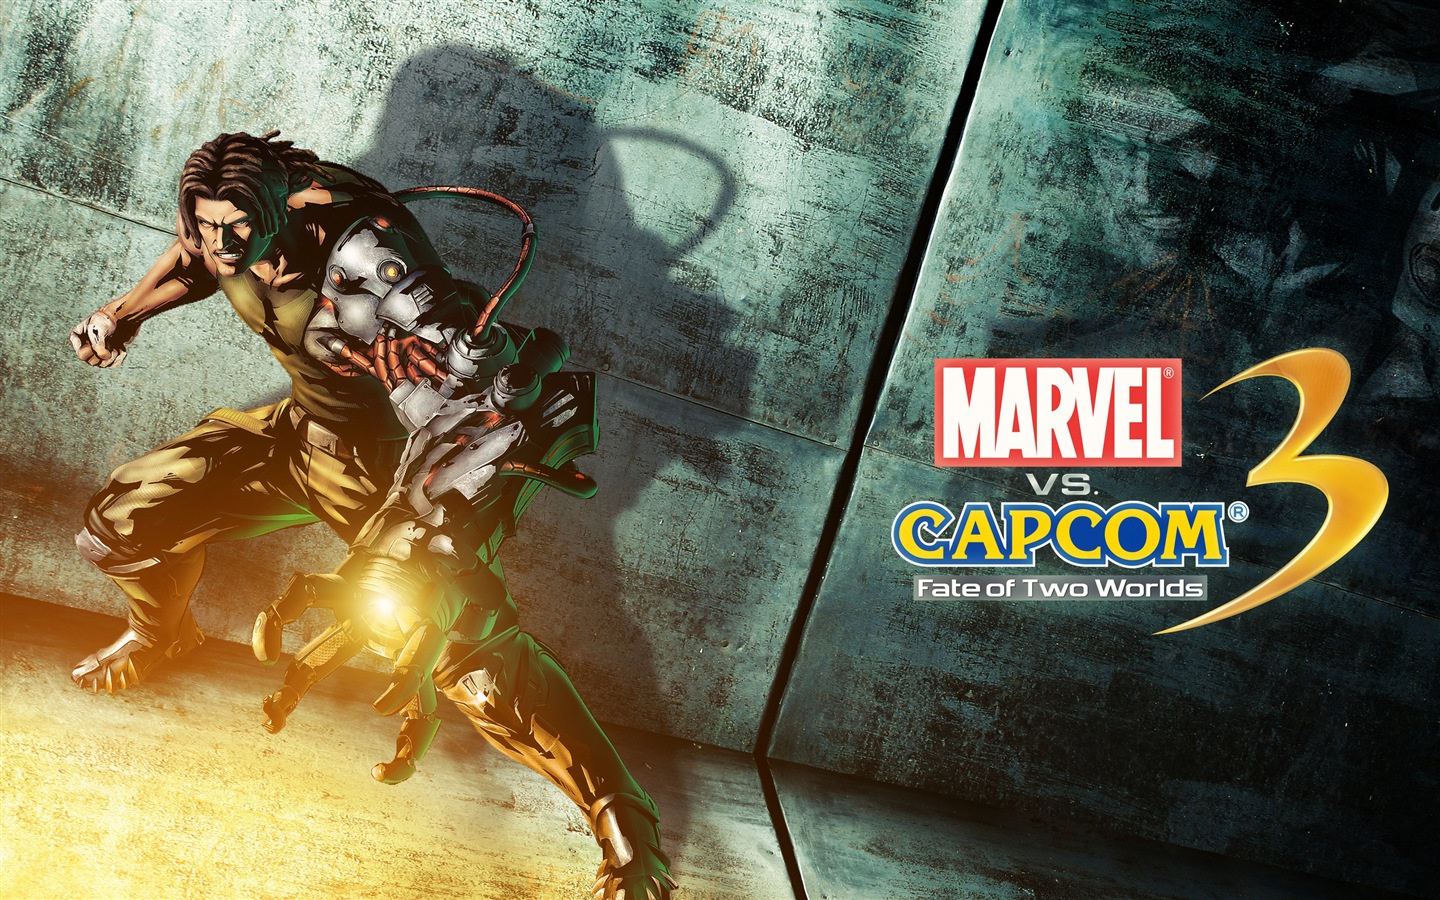 Marvel VS. Capcom 3: Fate of Two Worlds 漫畫英雄VS.卡普空3 高清遊戲壁紙 #8 - 1440x900